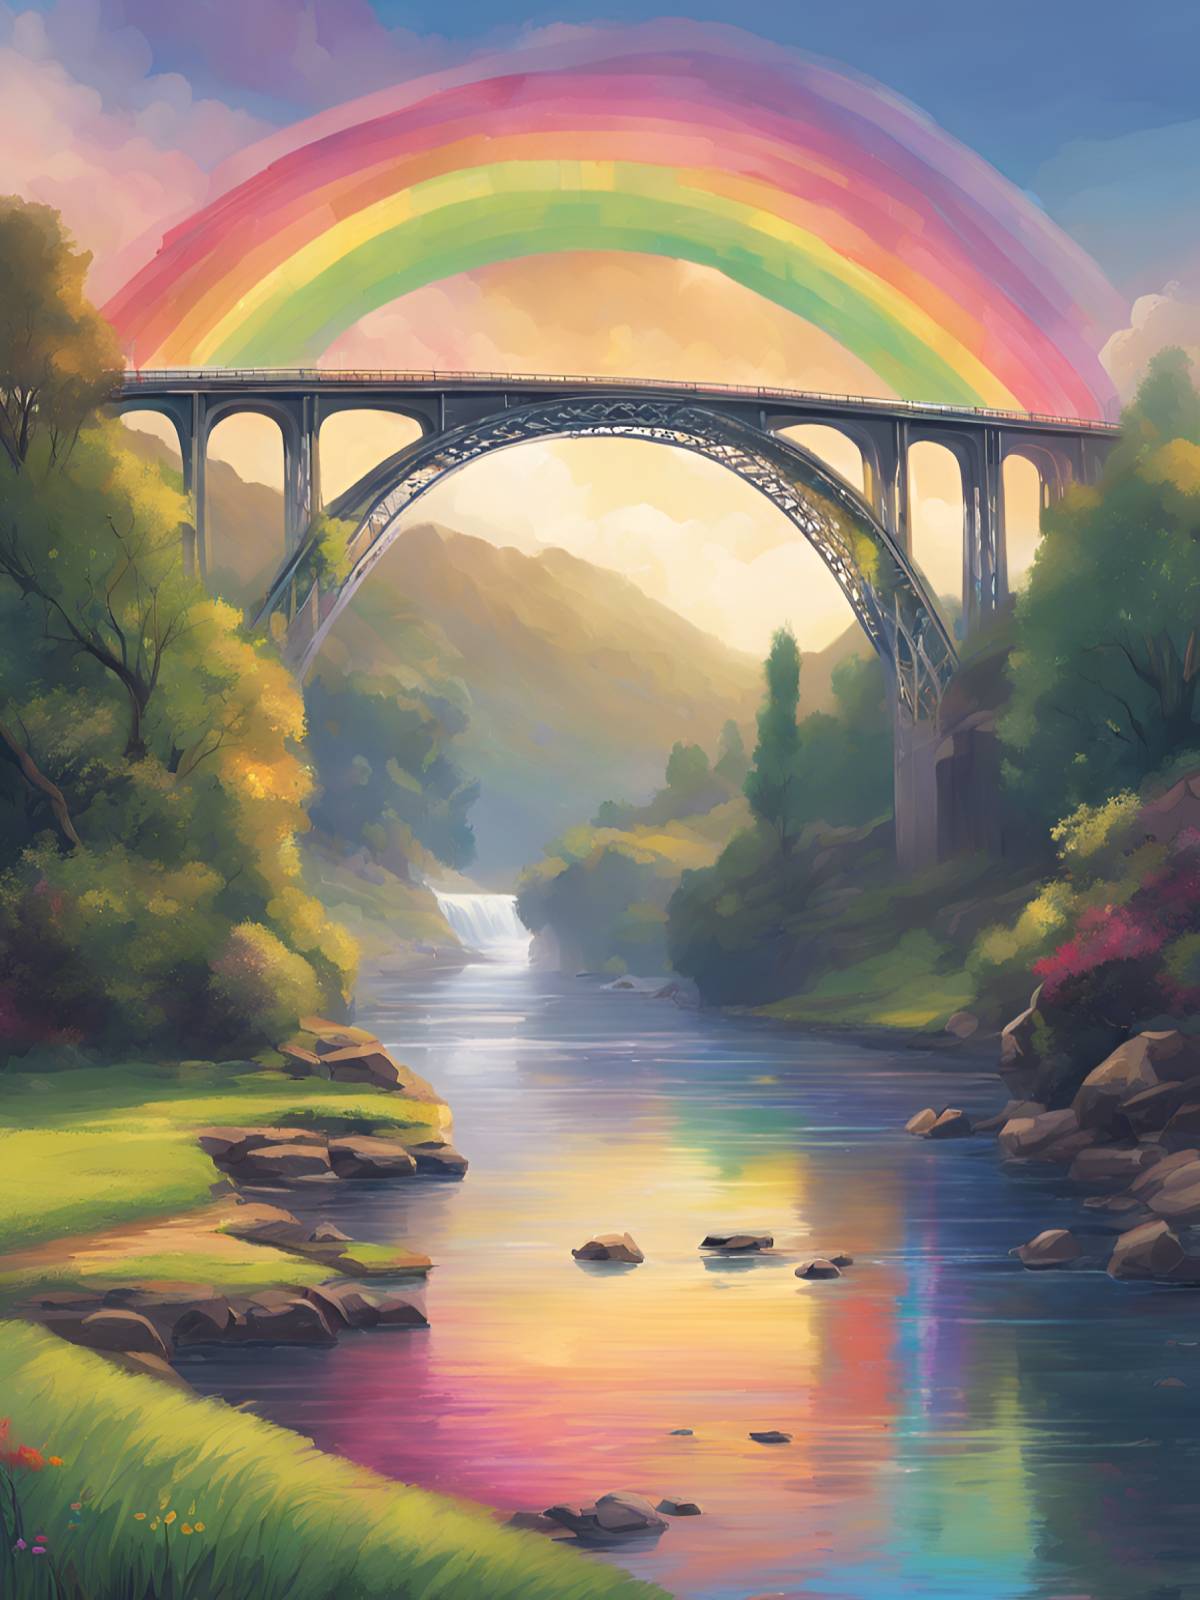 diamonds-wizard-diamond-painting-kits-Landscape-Rainbow-Rainbow-Bridge-original.jpg